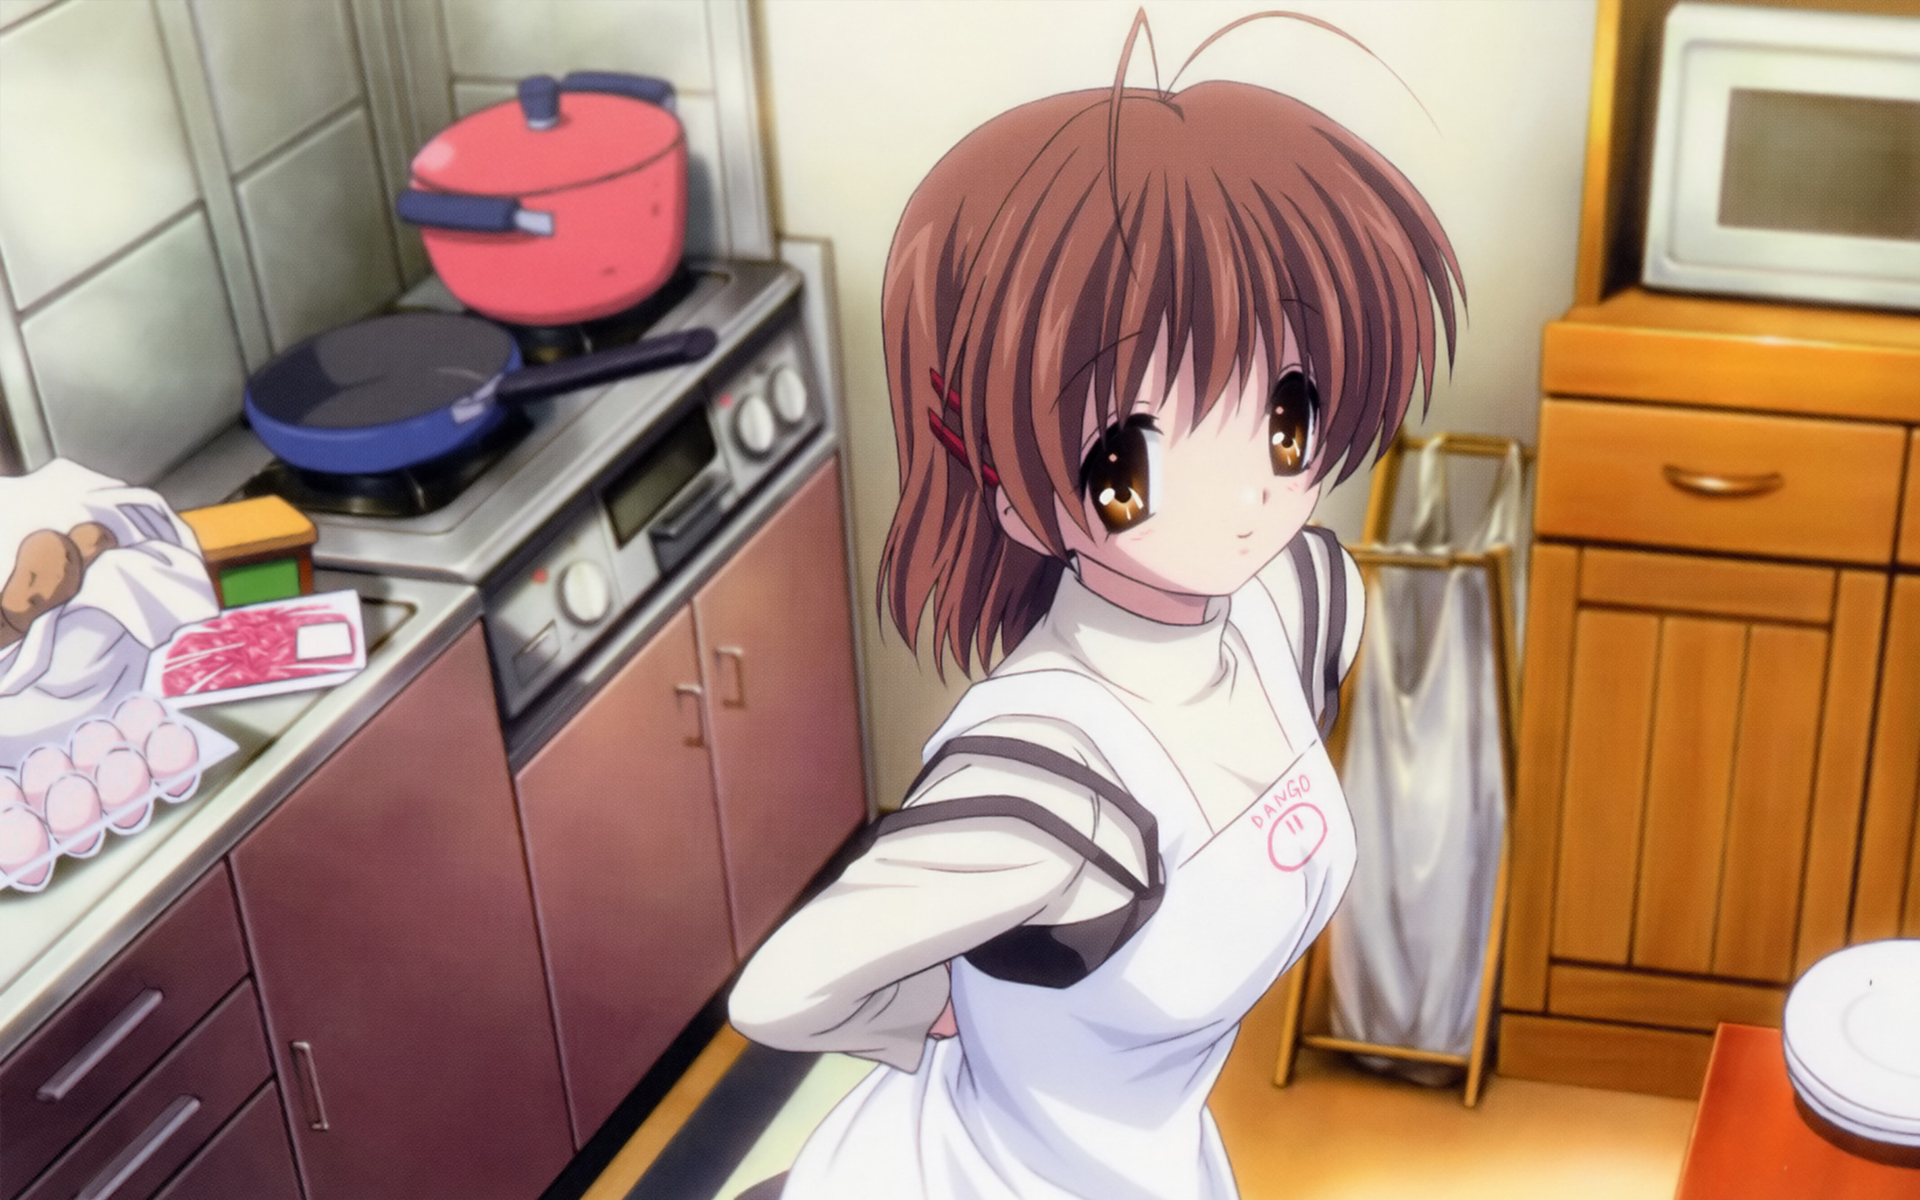 Nagisa Furukawa, the subject of this image depicts a character from an HD desktop wallpaper.